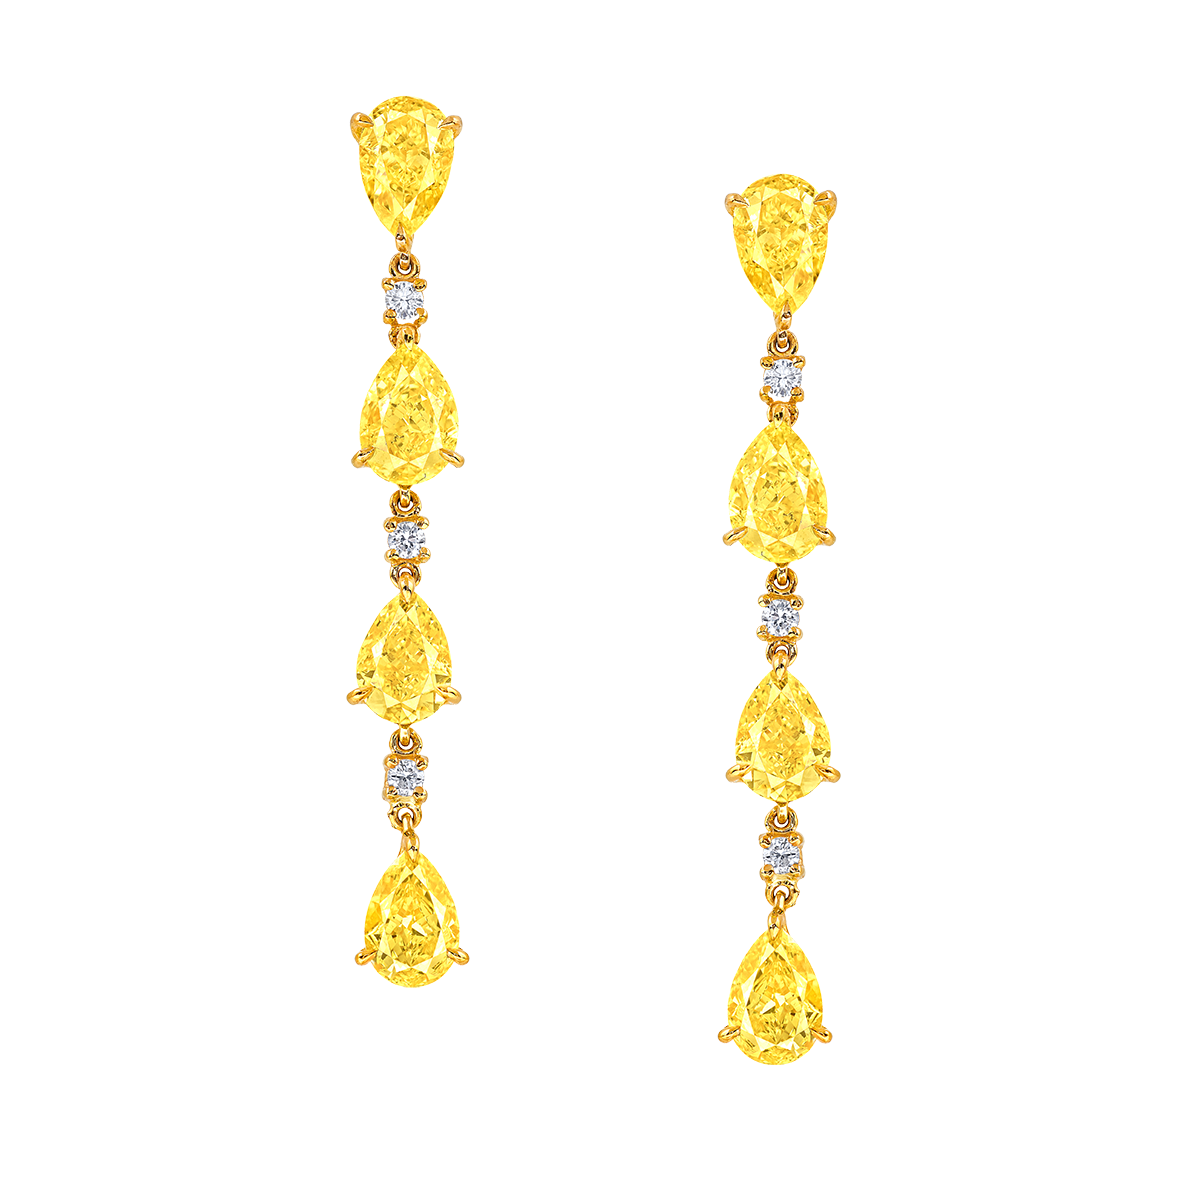 GIA 3.76克拉 濃彩黃鑽鑽石耳環
Fancy Intense Yellow Colored 
Diamond and Diamond Earrings